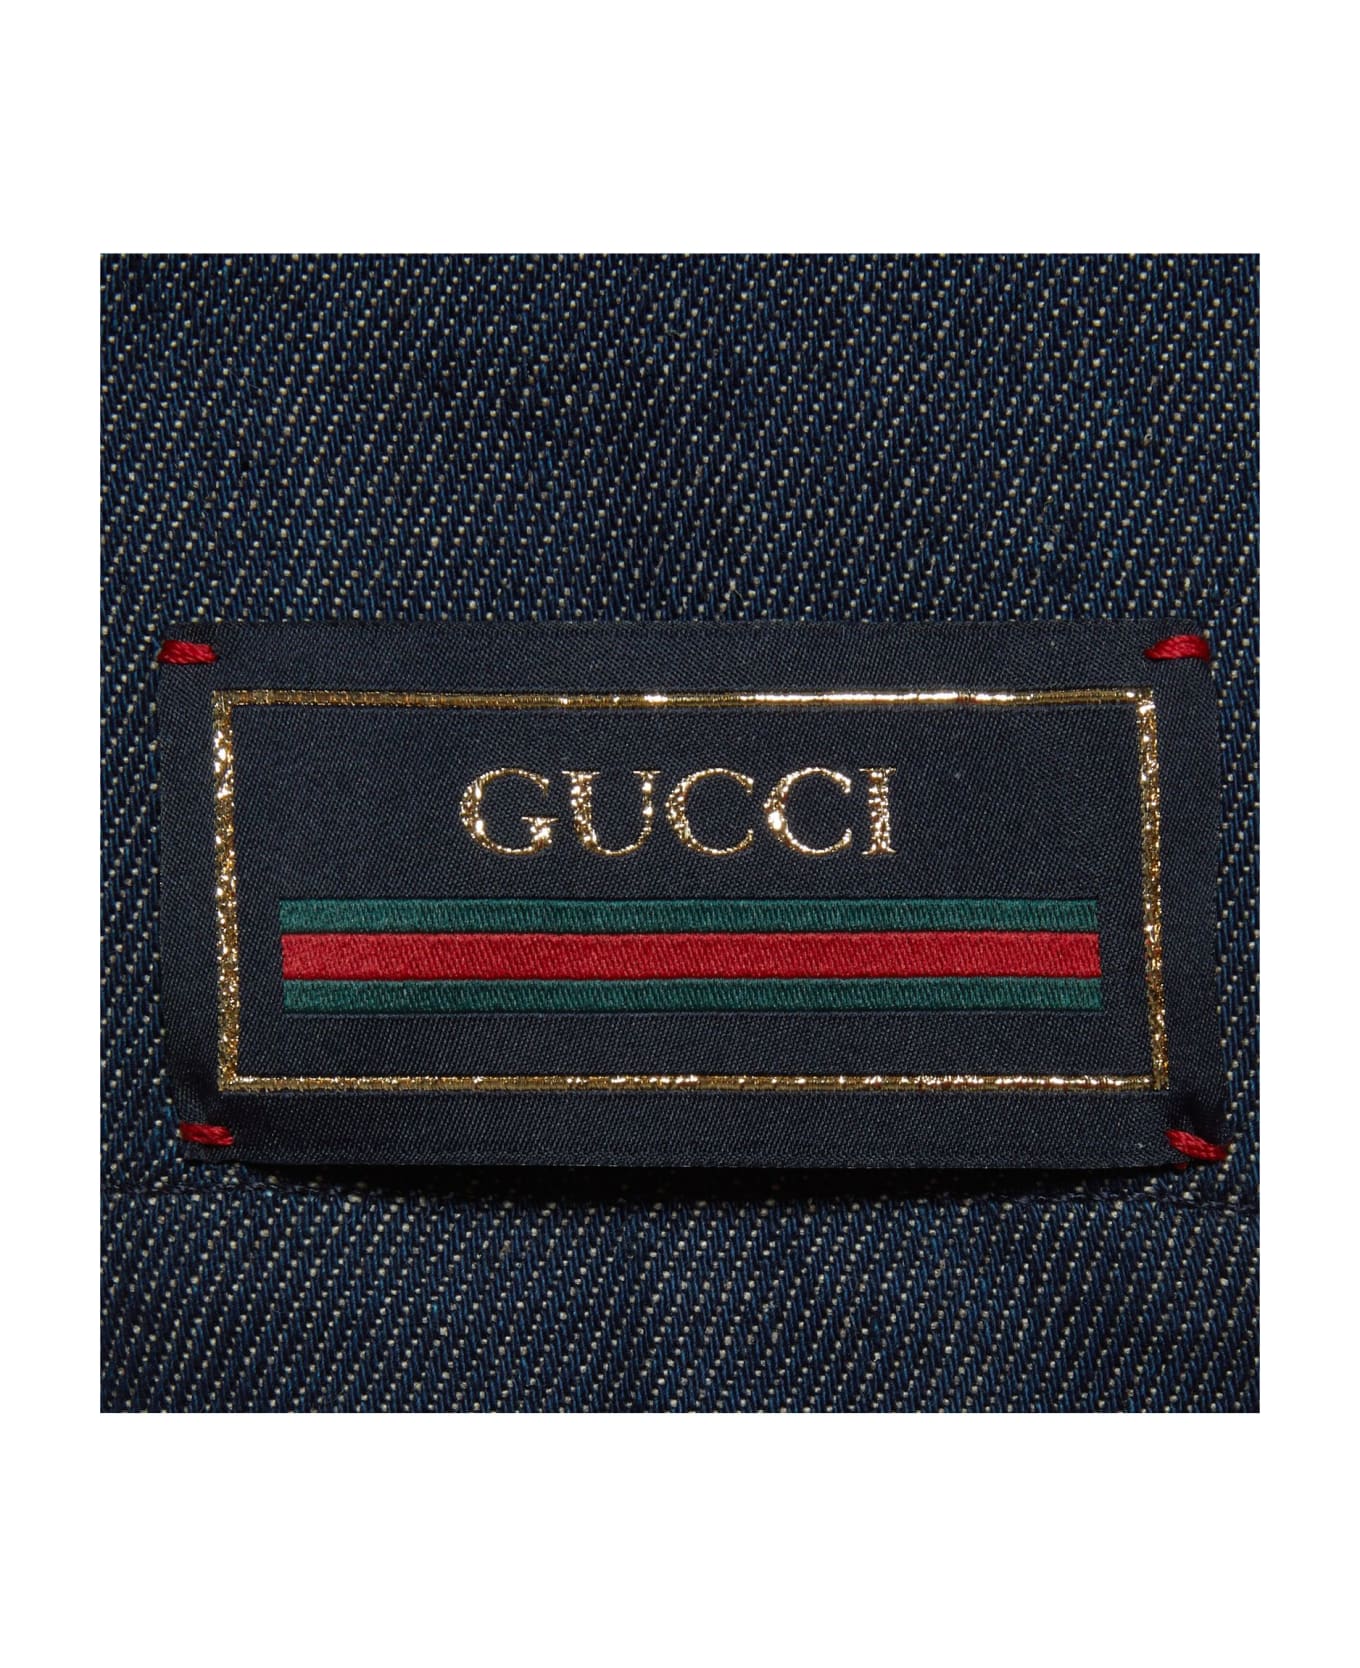 Gucci Dark Blue Washed Denim Jacket - Blue コート＆ジャケット